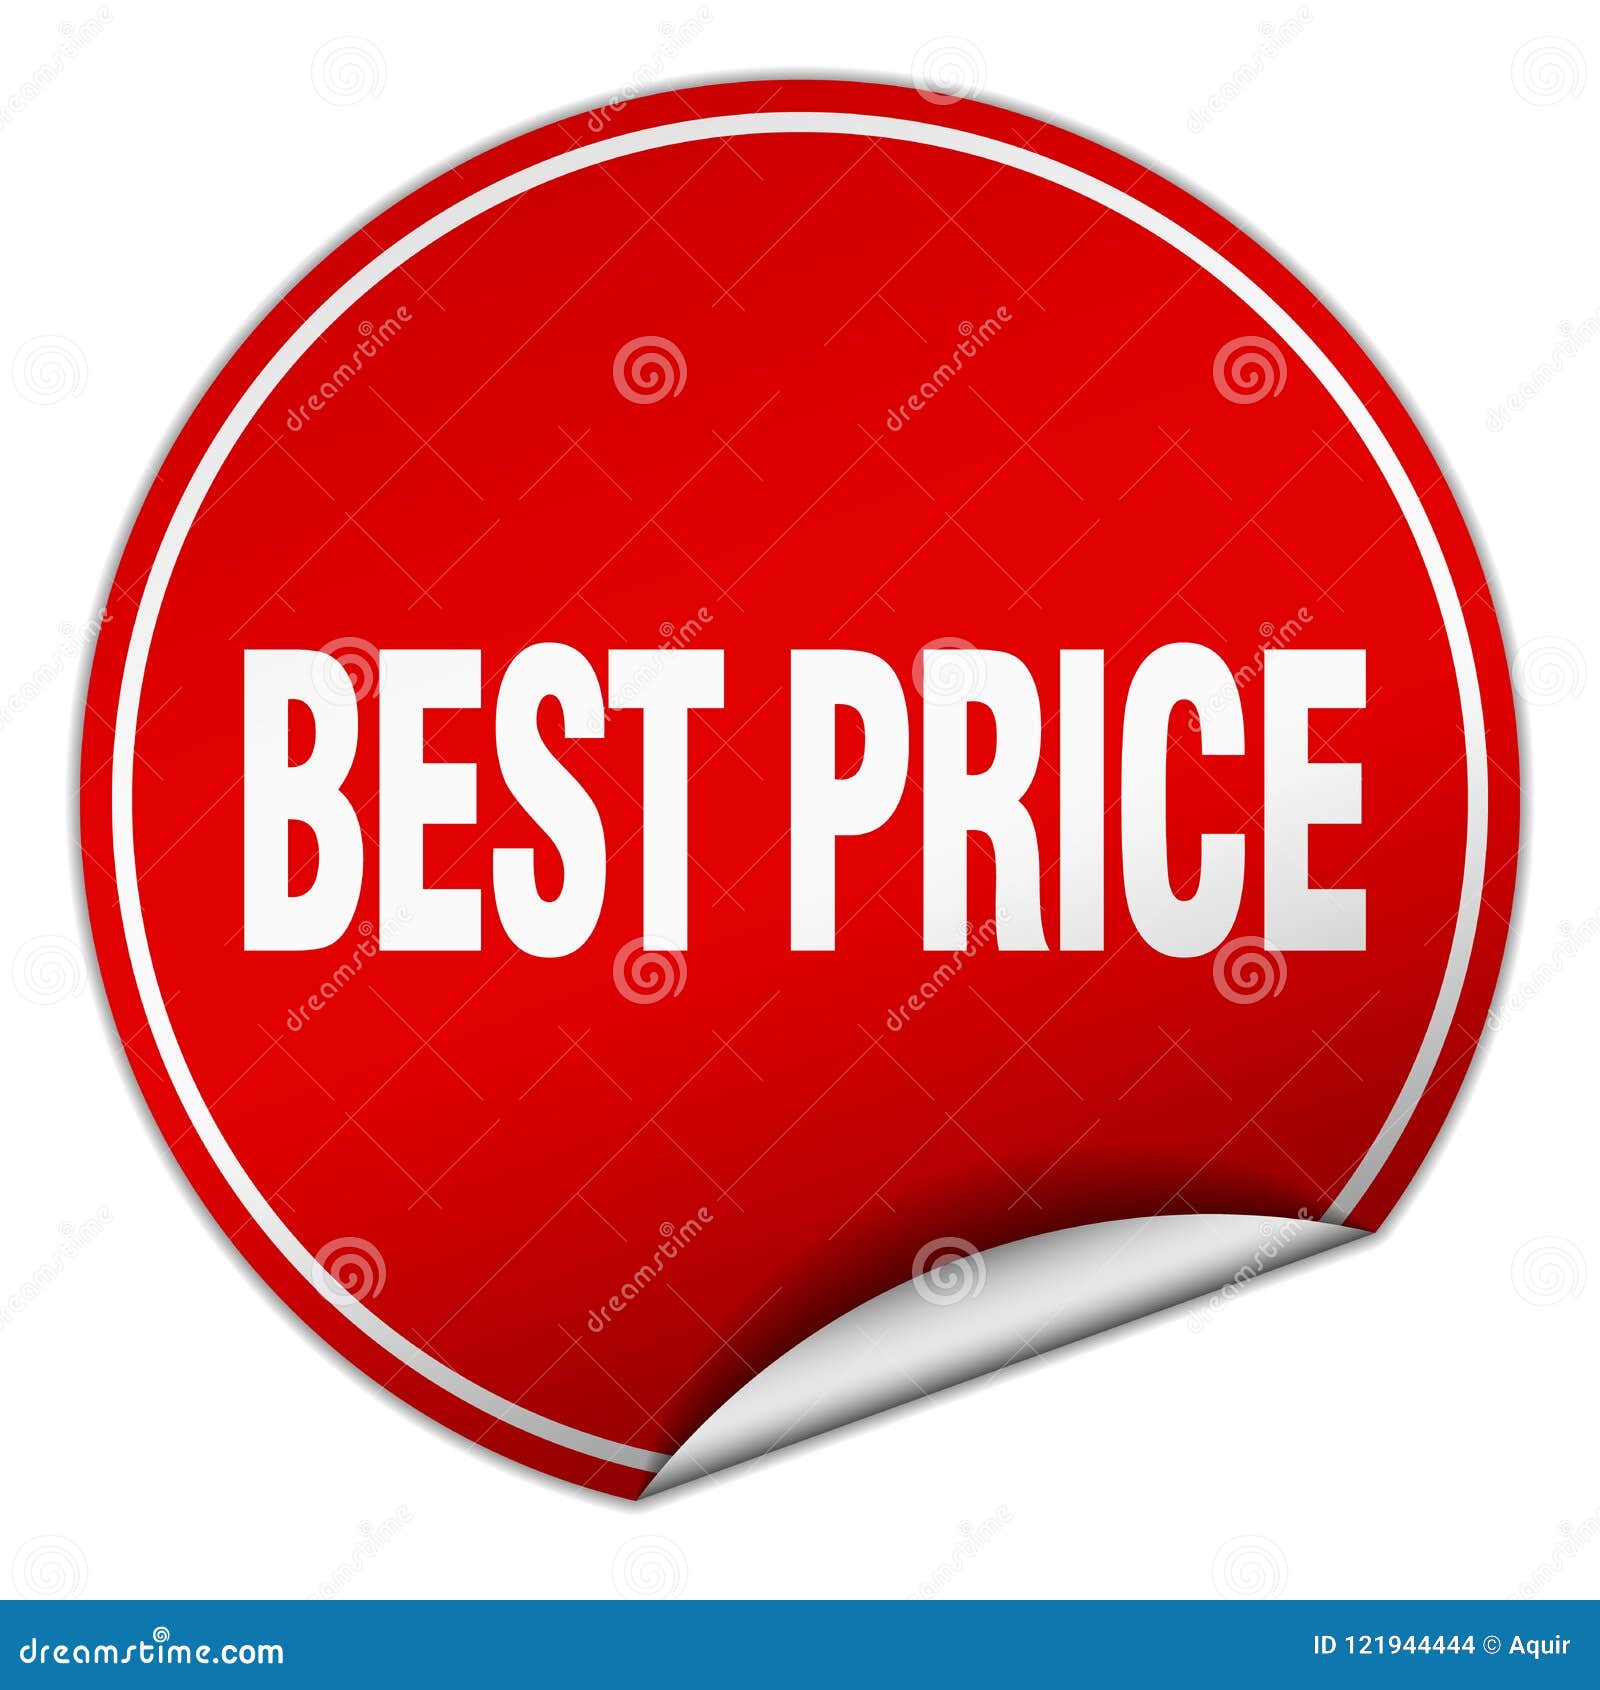 Best price sticker stock vector. Illustration of sign - 121944444